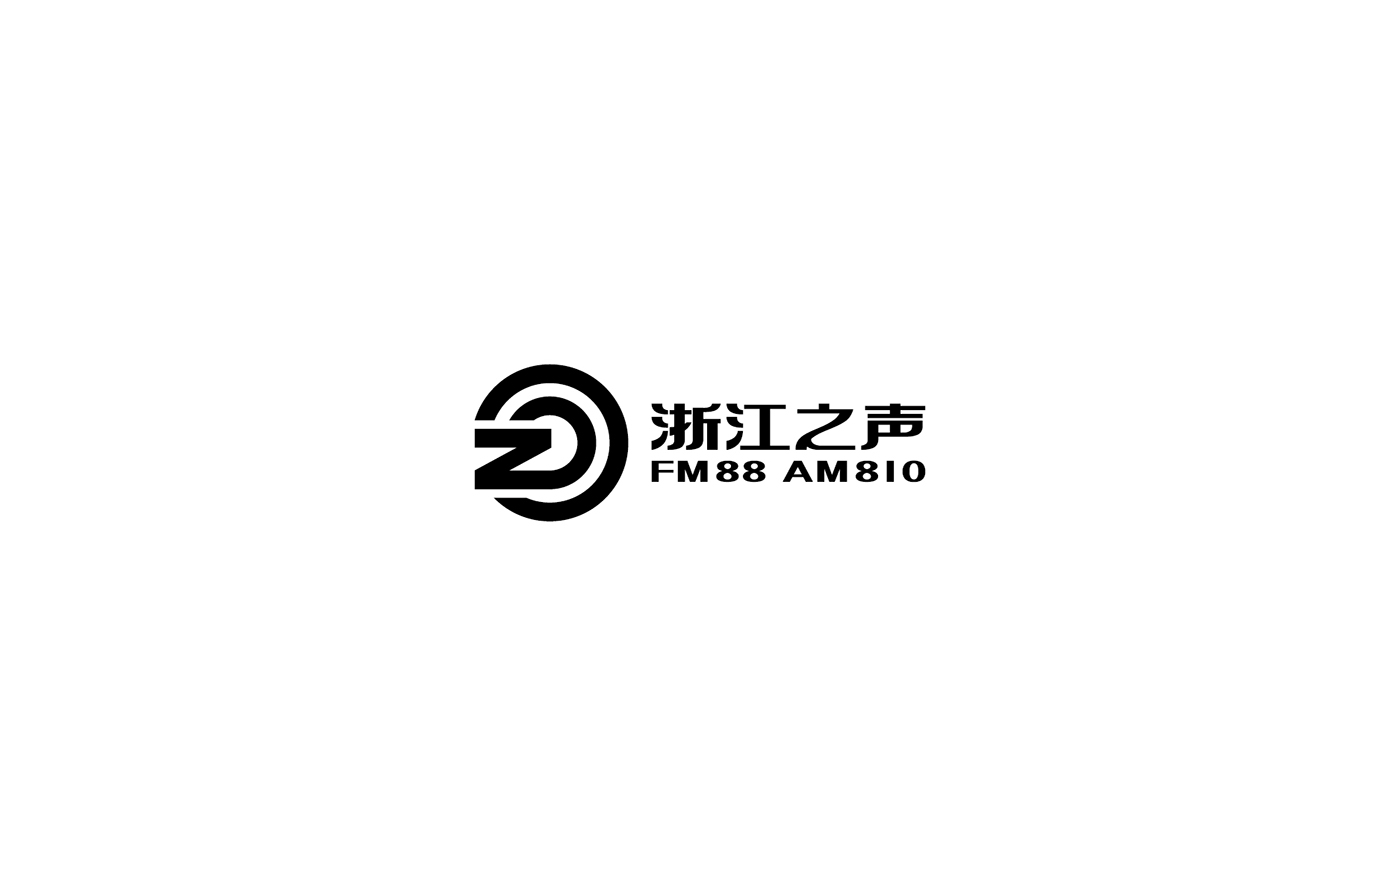 logo abstract logo School Logo animal logo chinese logo shanghai logo industry logo Information logo round logo